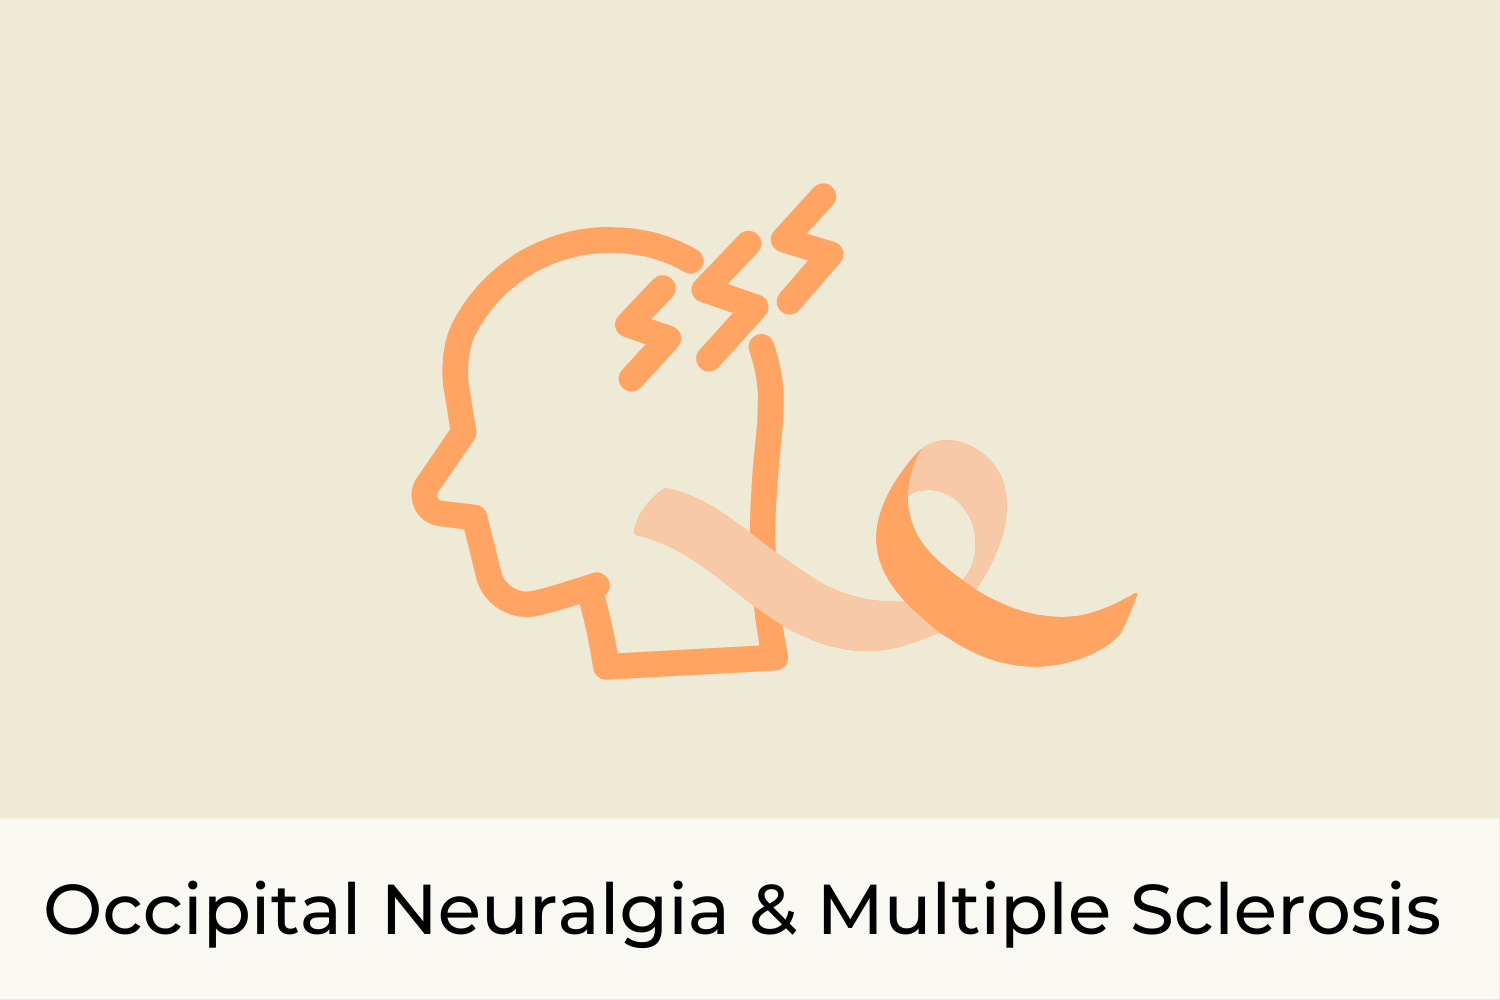 Occipital Neuralgia and Multiple Sclerosis